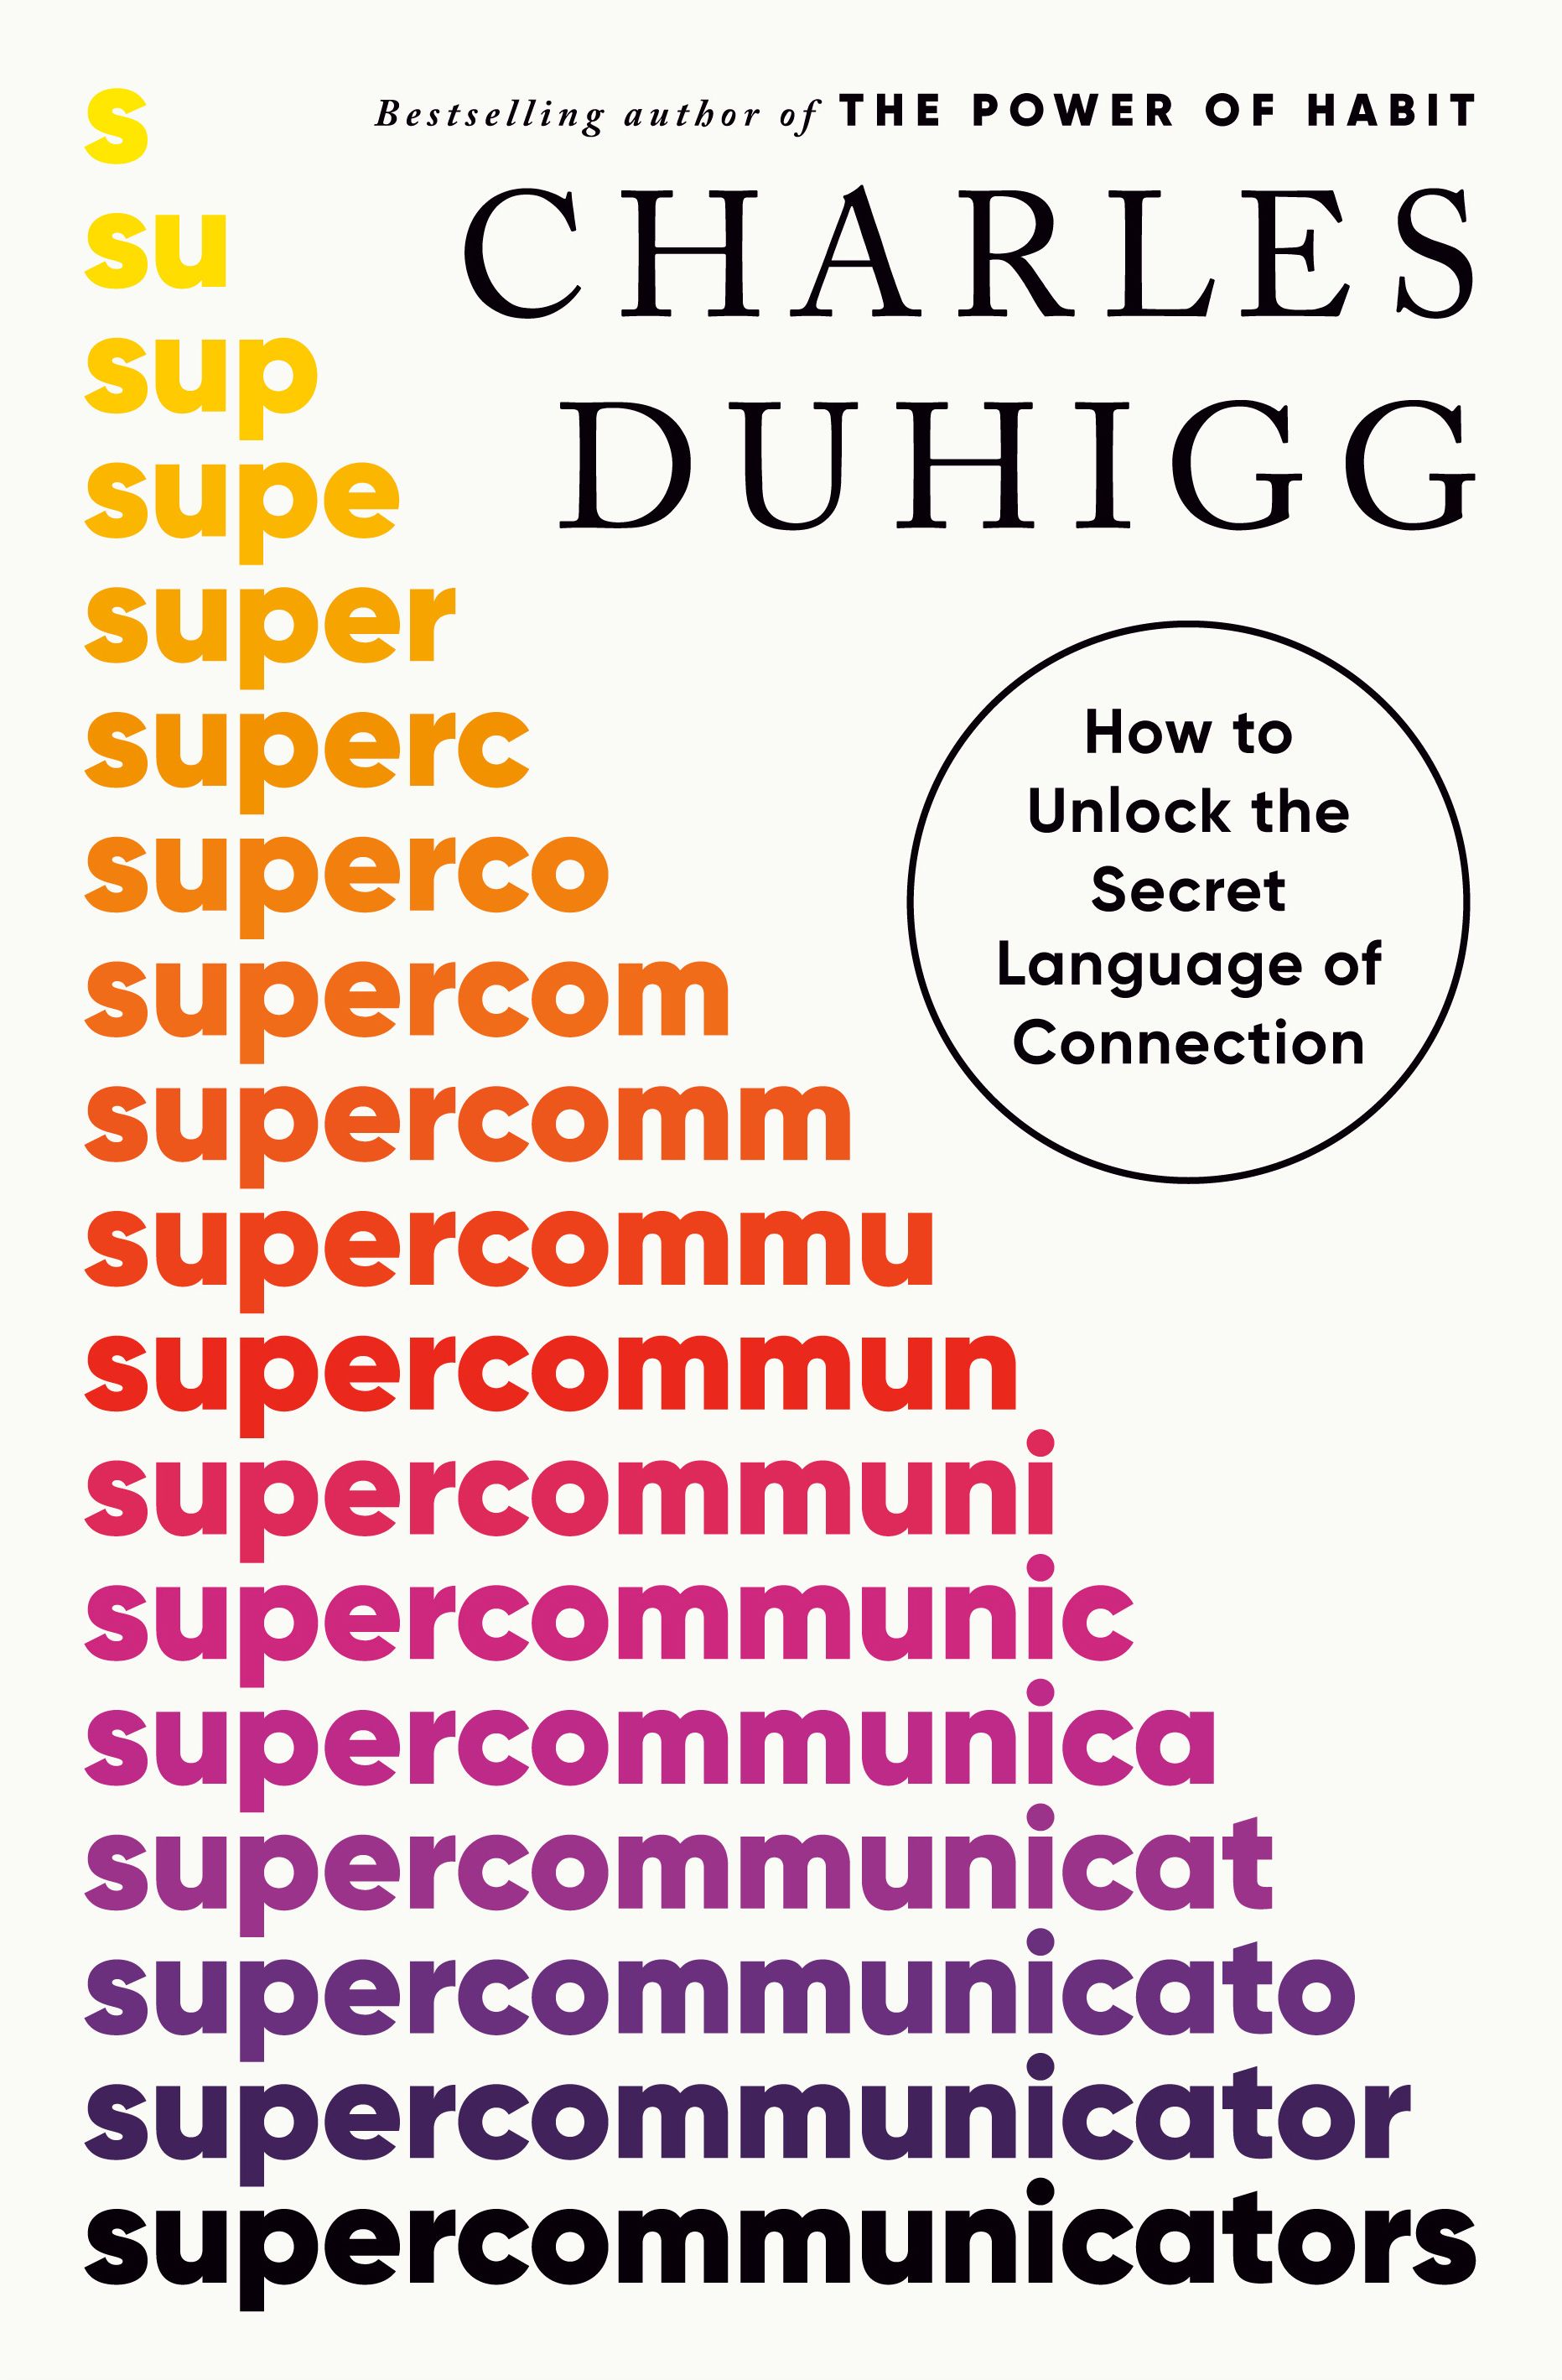 Super Communicators Book Summary